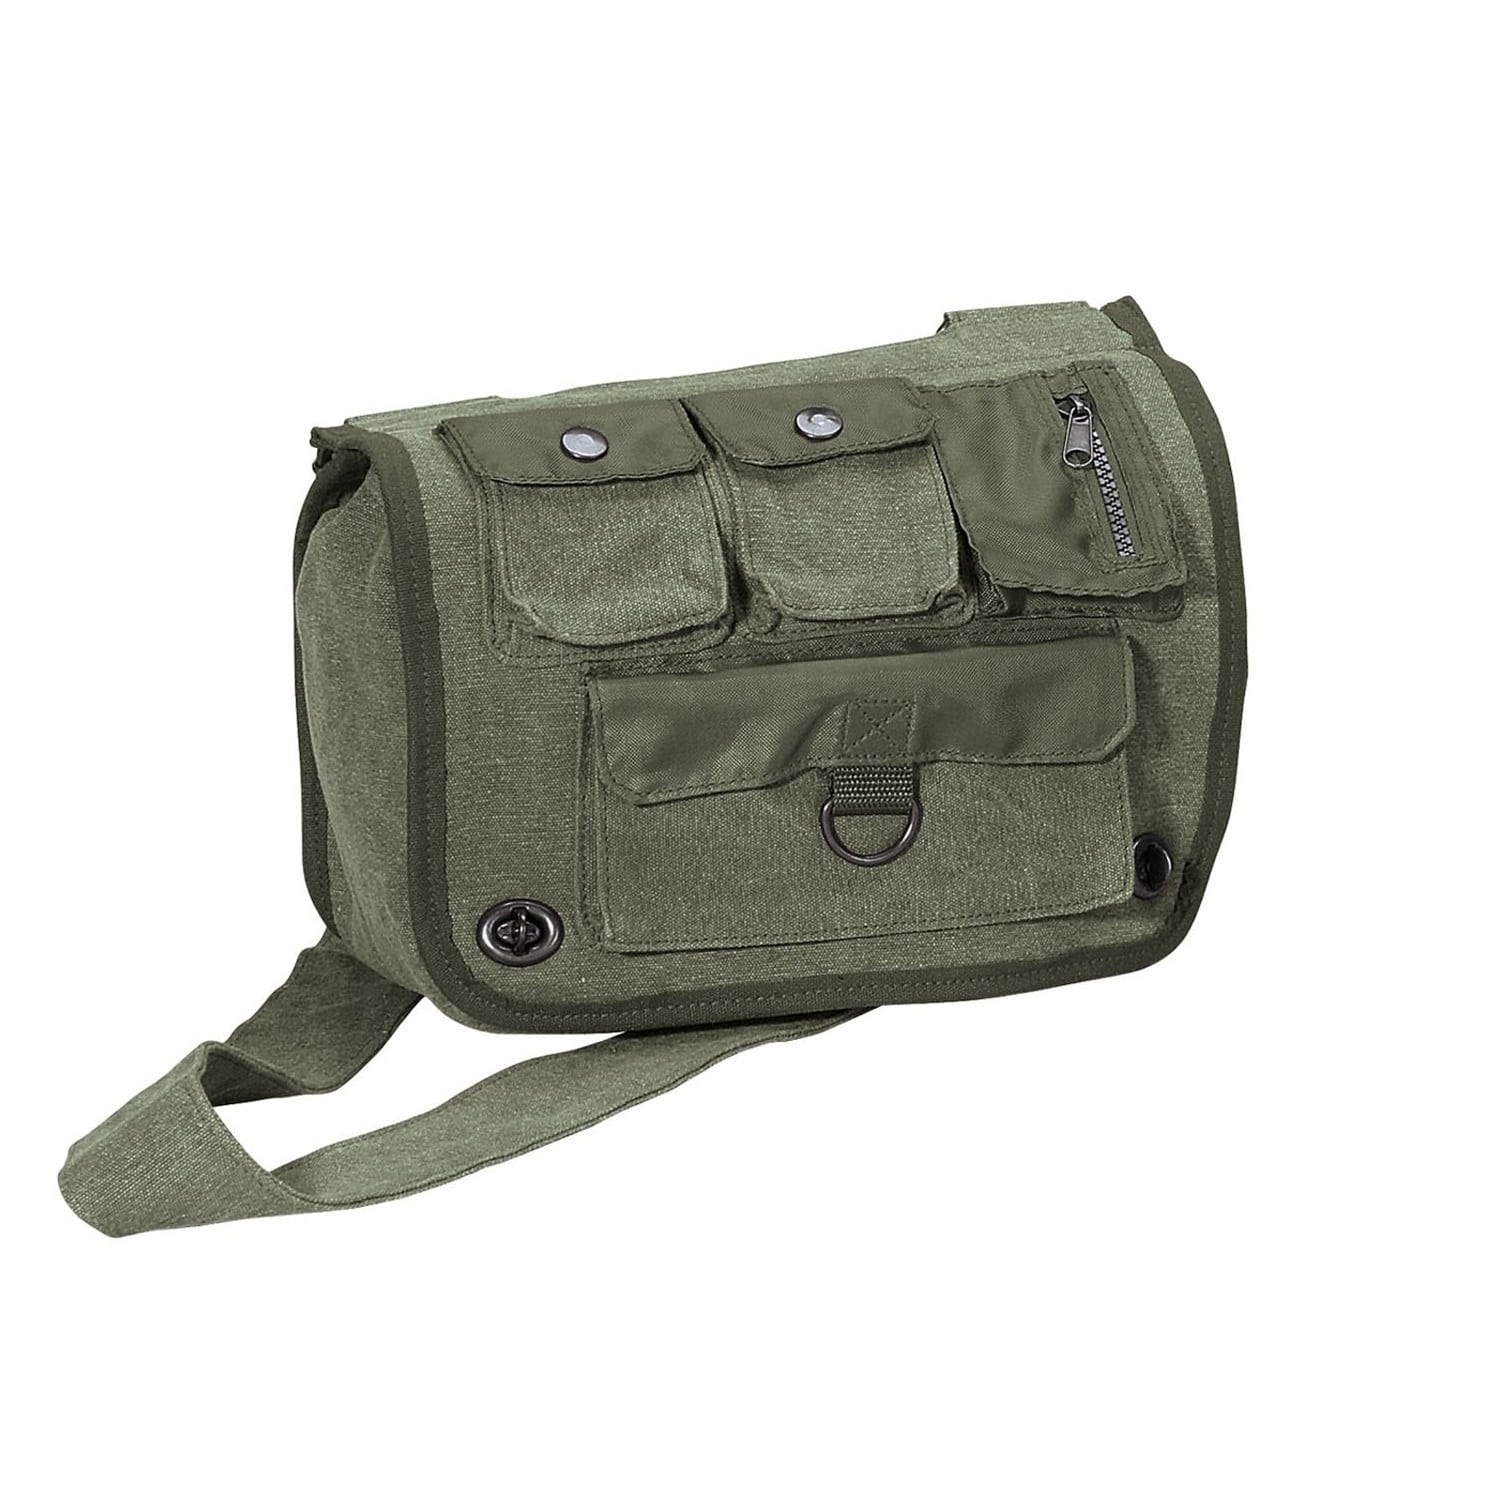 Patricia Nash | Bags | Patricia Nash Leather Handbag Purse Lots Of Pockets  Zippered Compartments | Poshmark